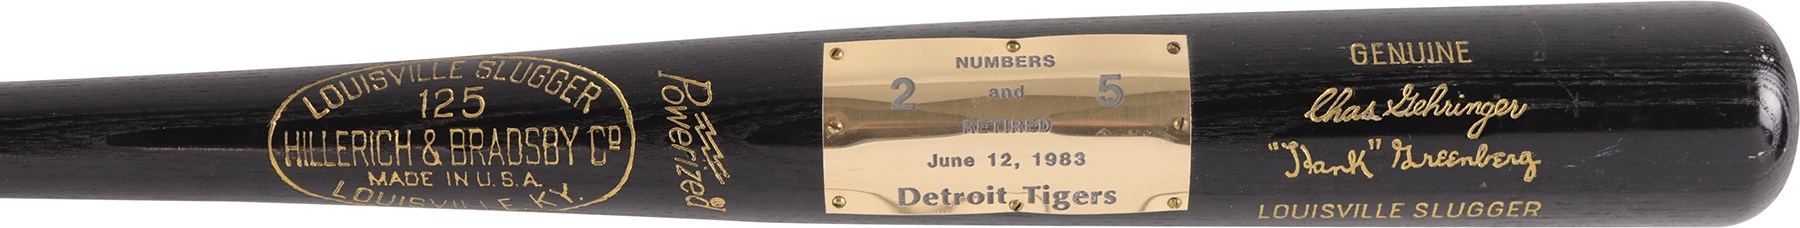 Ty Cobb and Detroit Tigers - 1983 Ltd. Edition Greenberg & Gehringer Retired Number Commemorative Bat